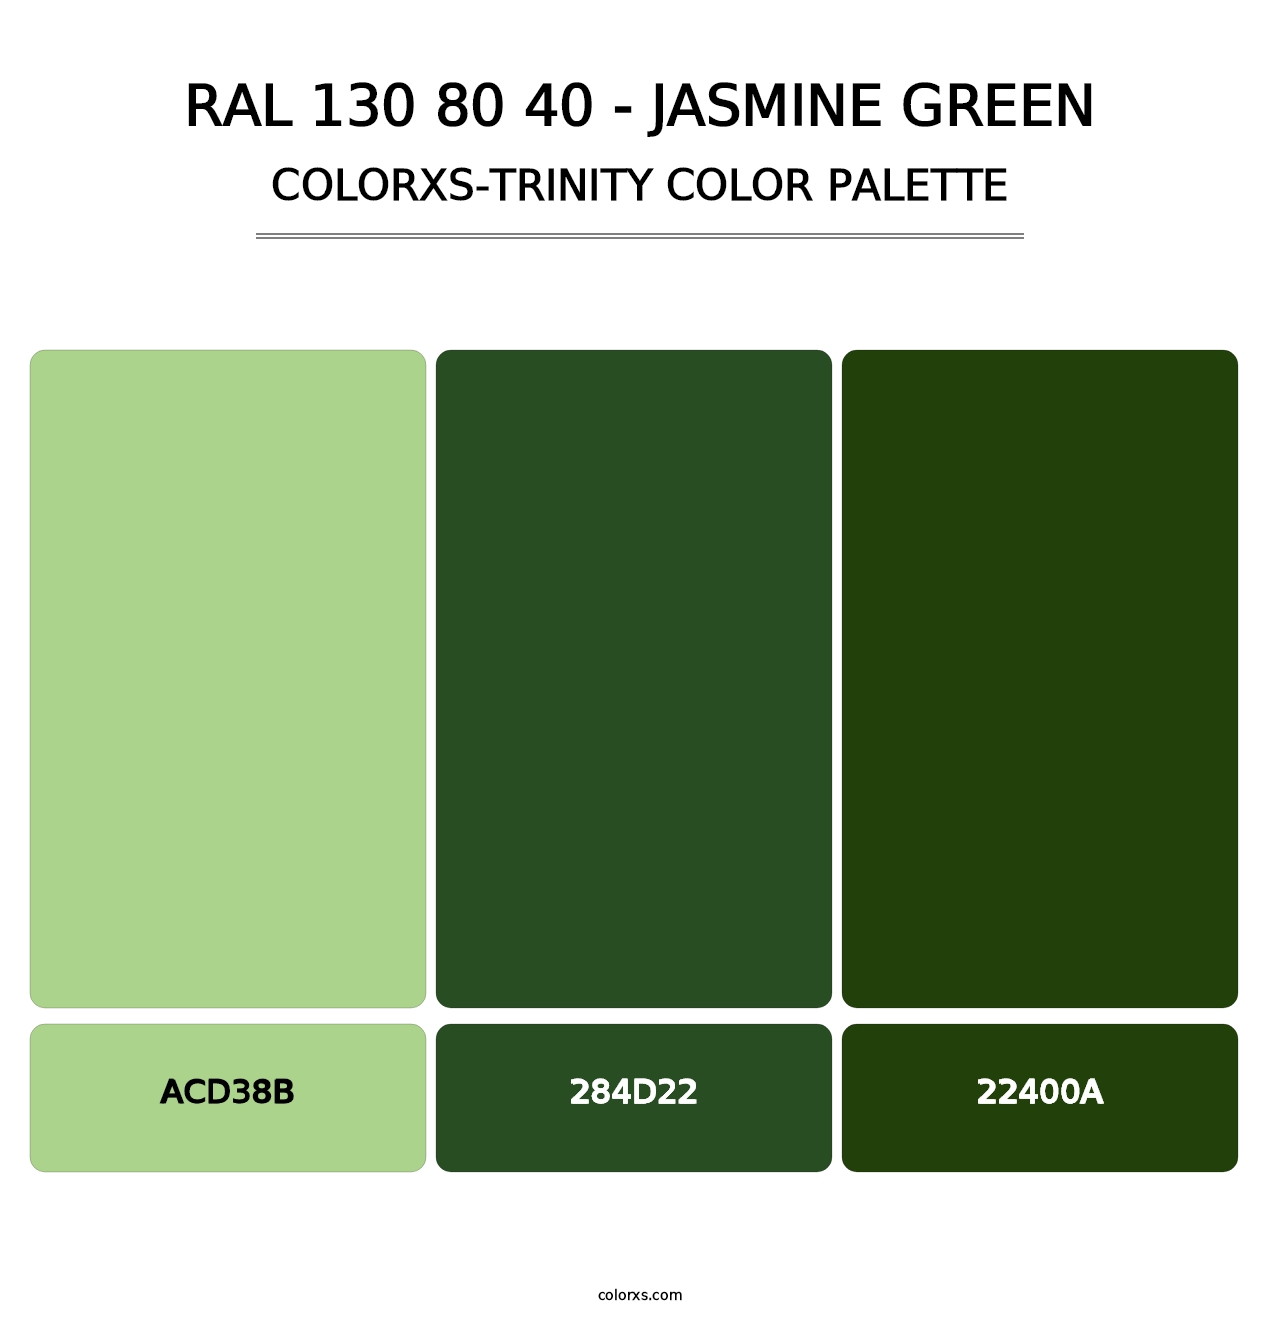 RAL 130 80 40 - Jasmine Green - Colorxs Trinity Palette